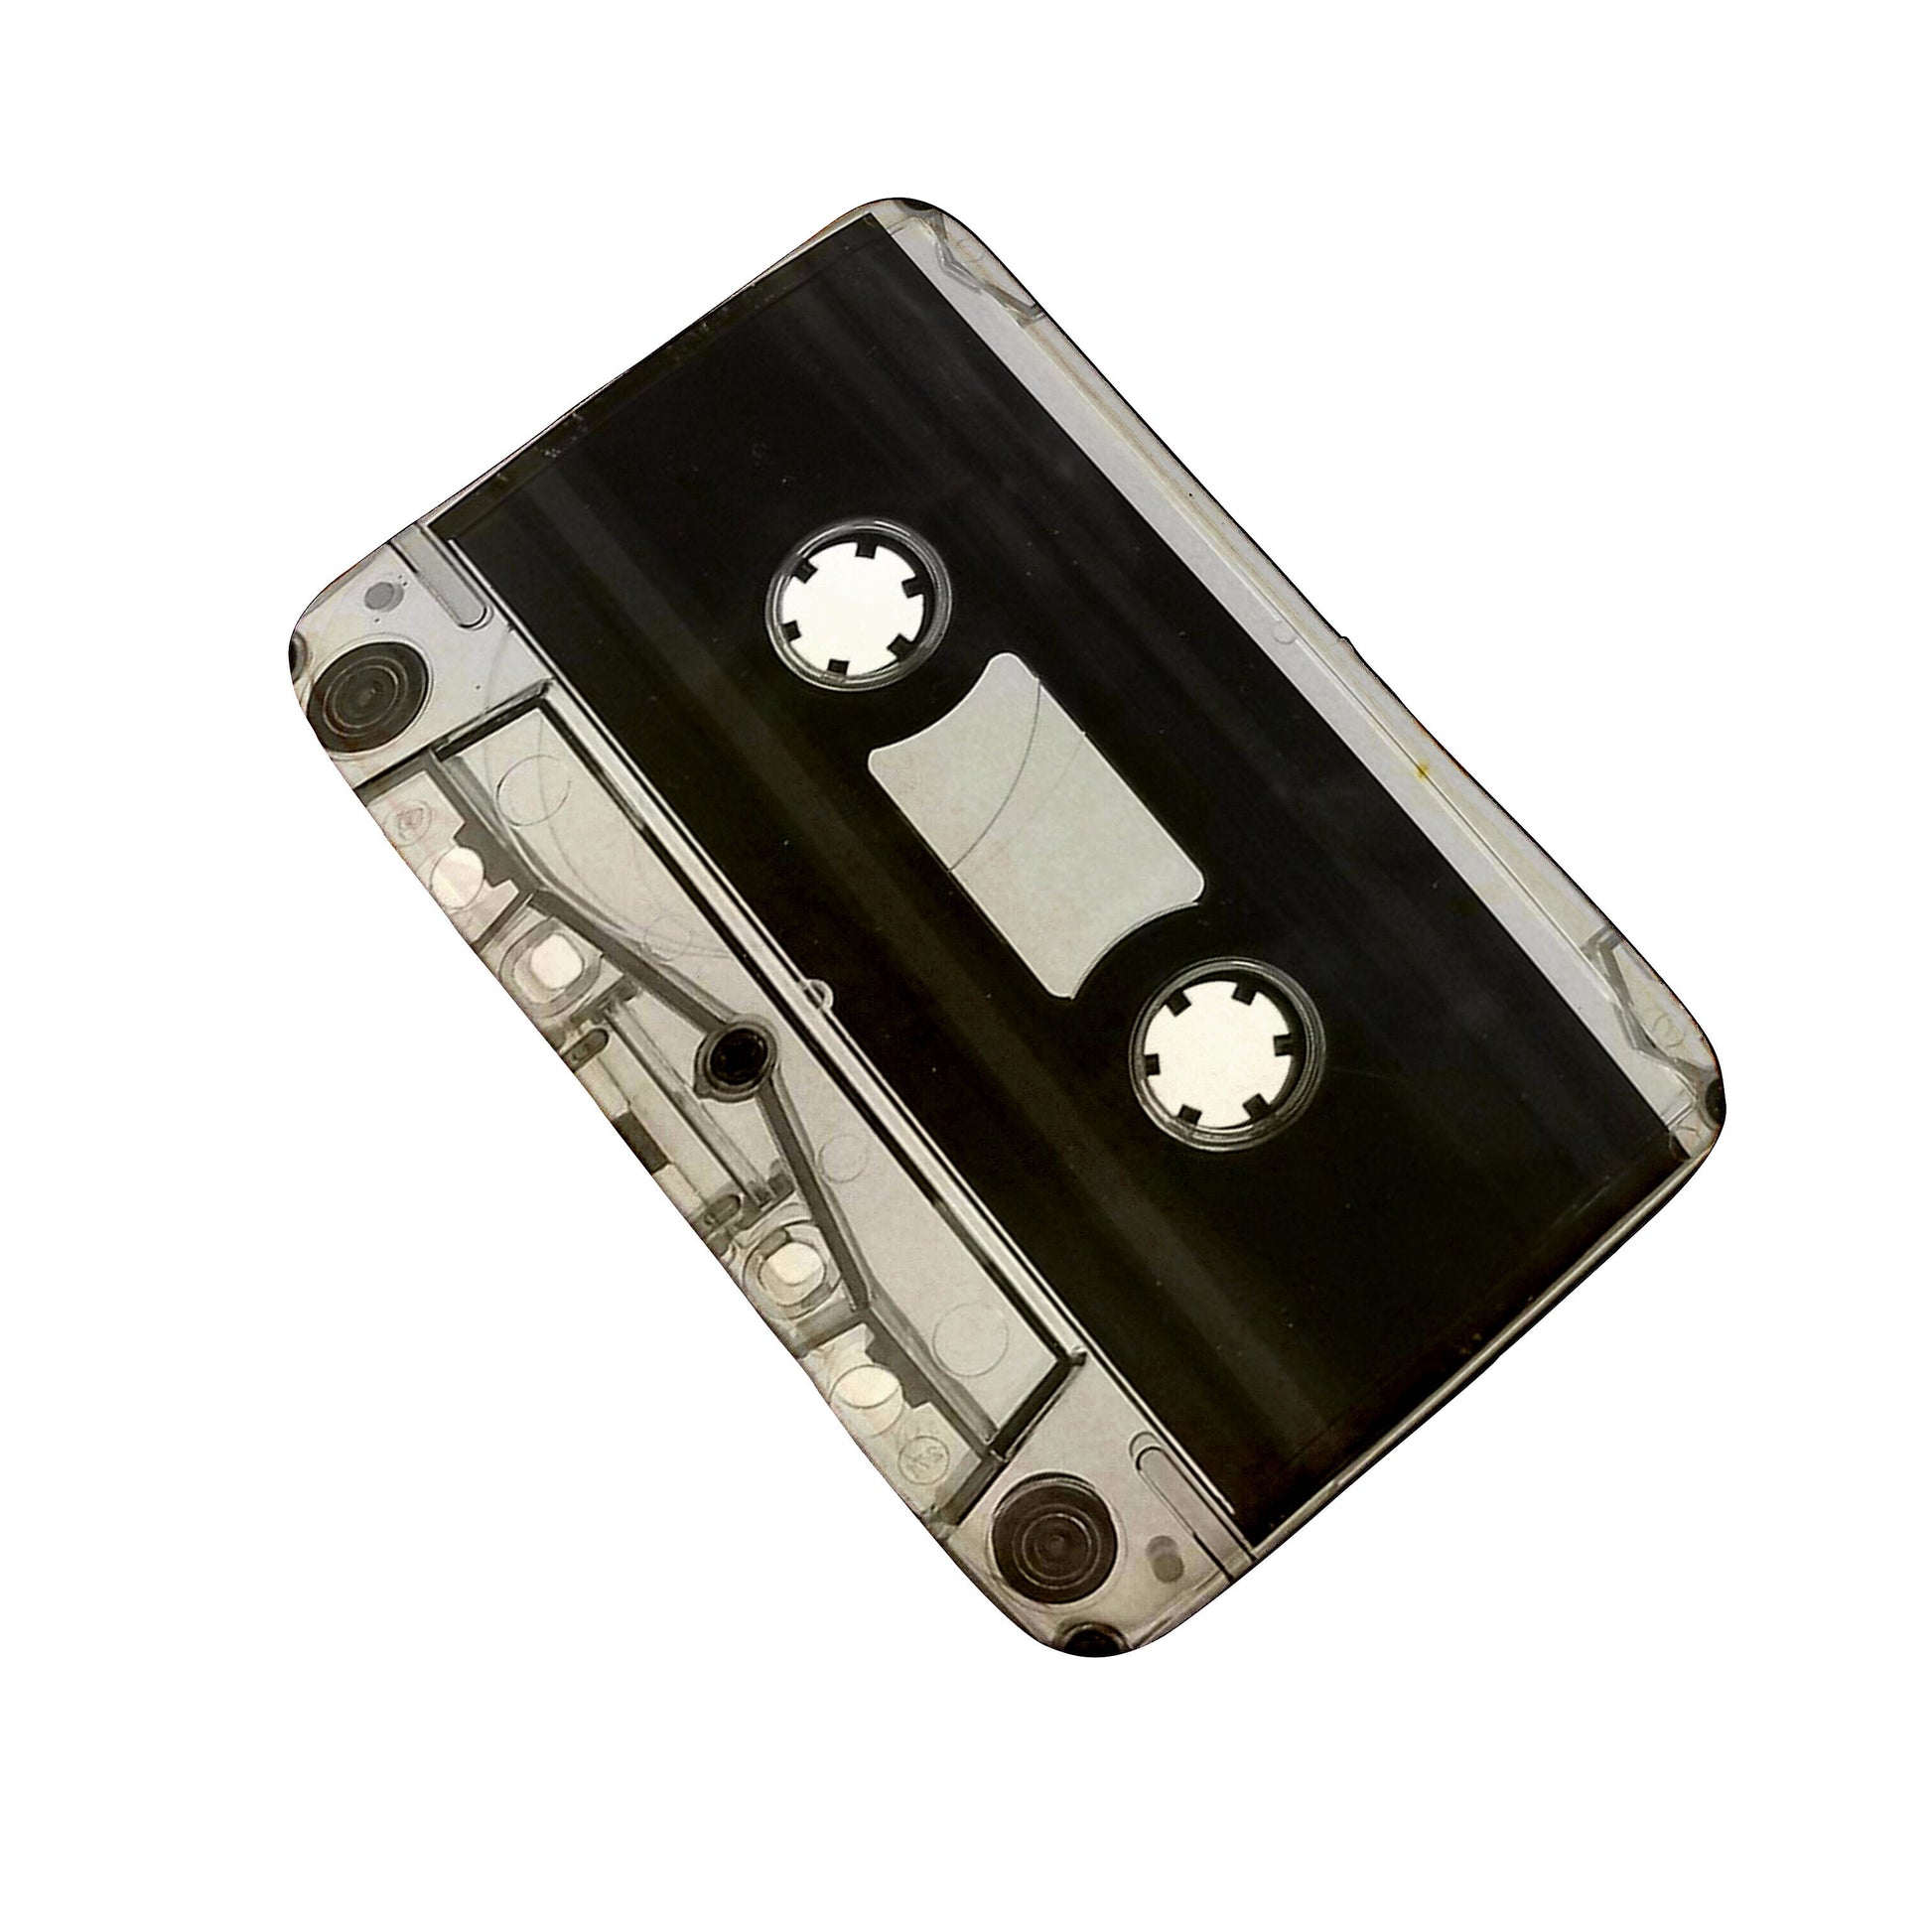 TEEK - A Bunch of Cassette Tape Rugs HOME DECOR theteekdotcom 2 15.75x23.62in 20-25 days